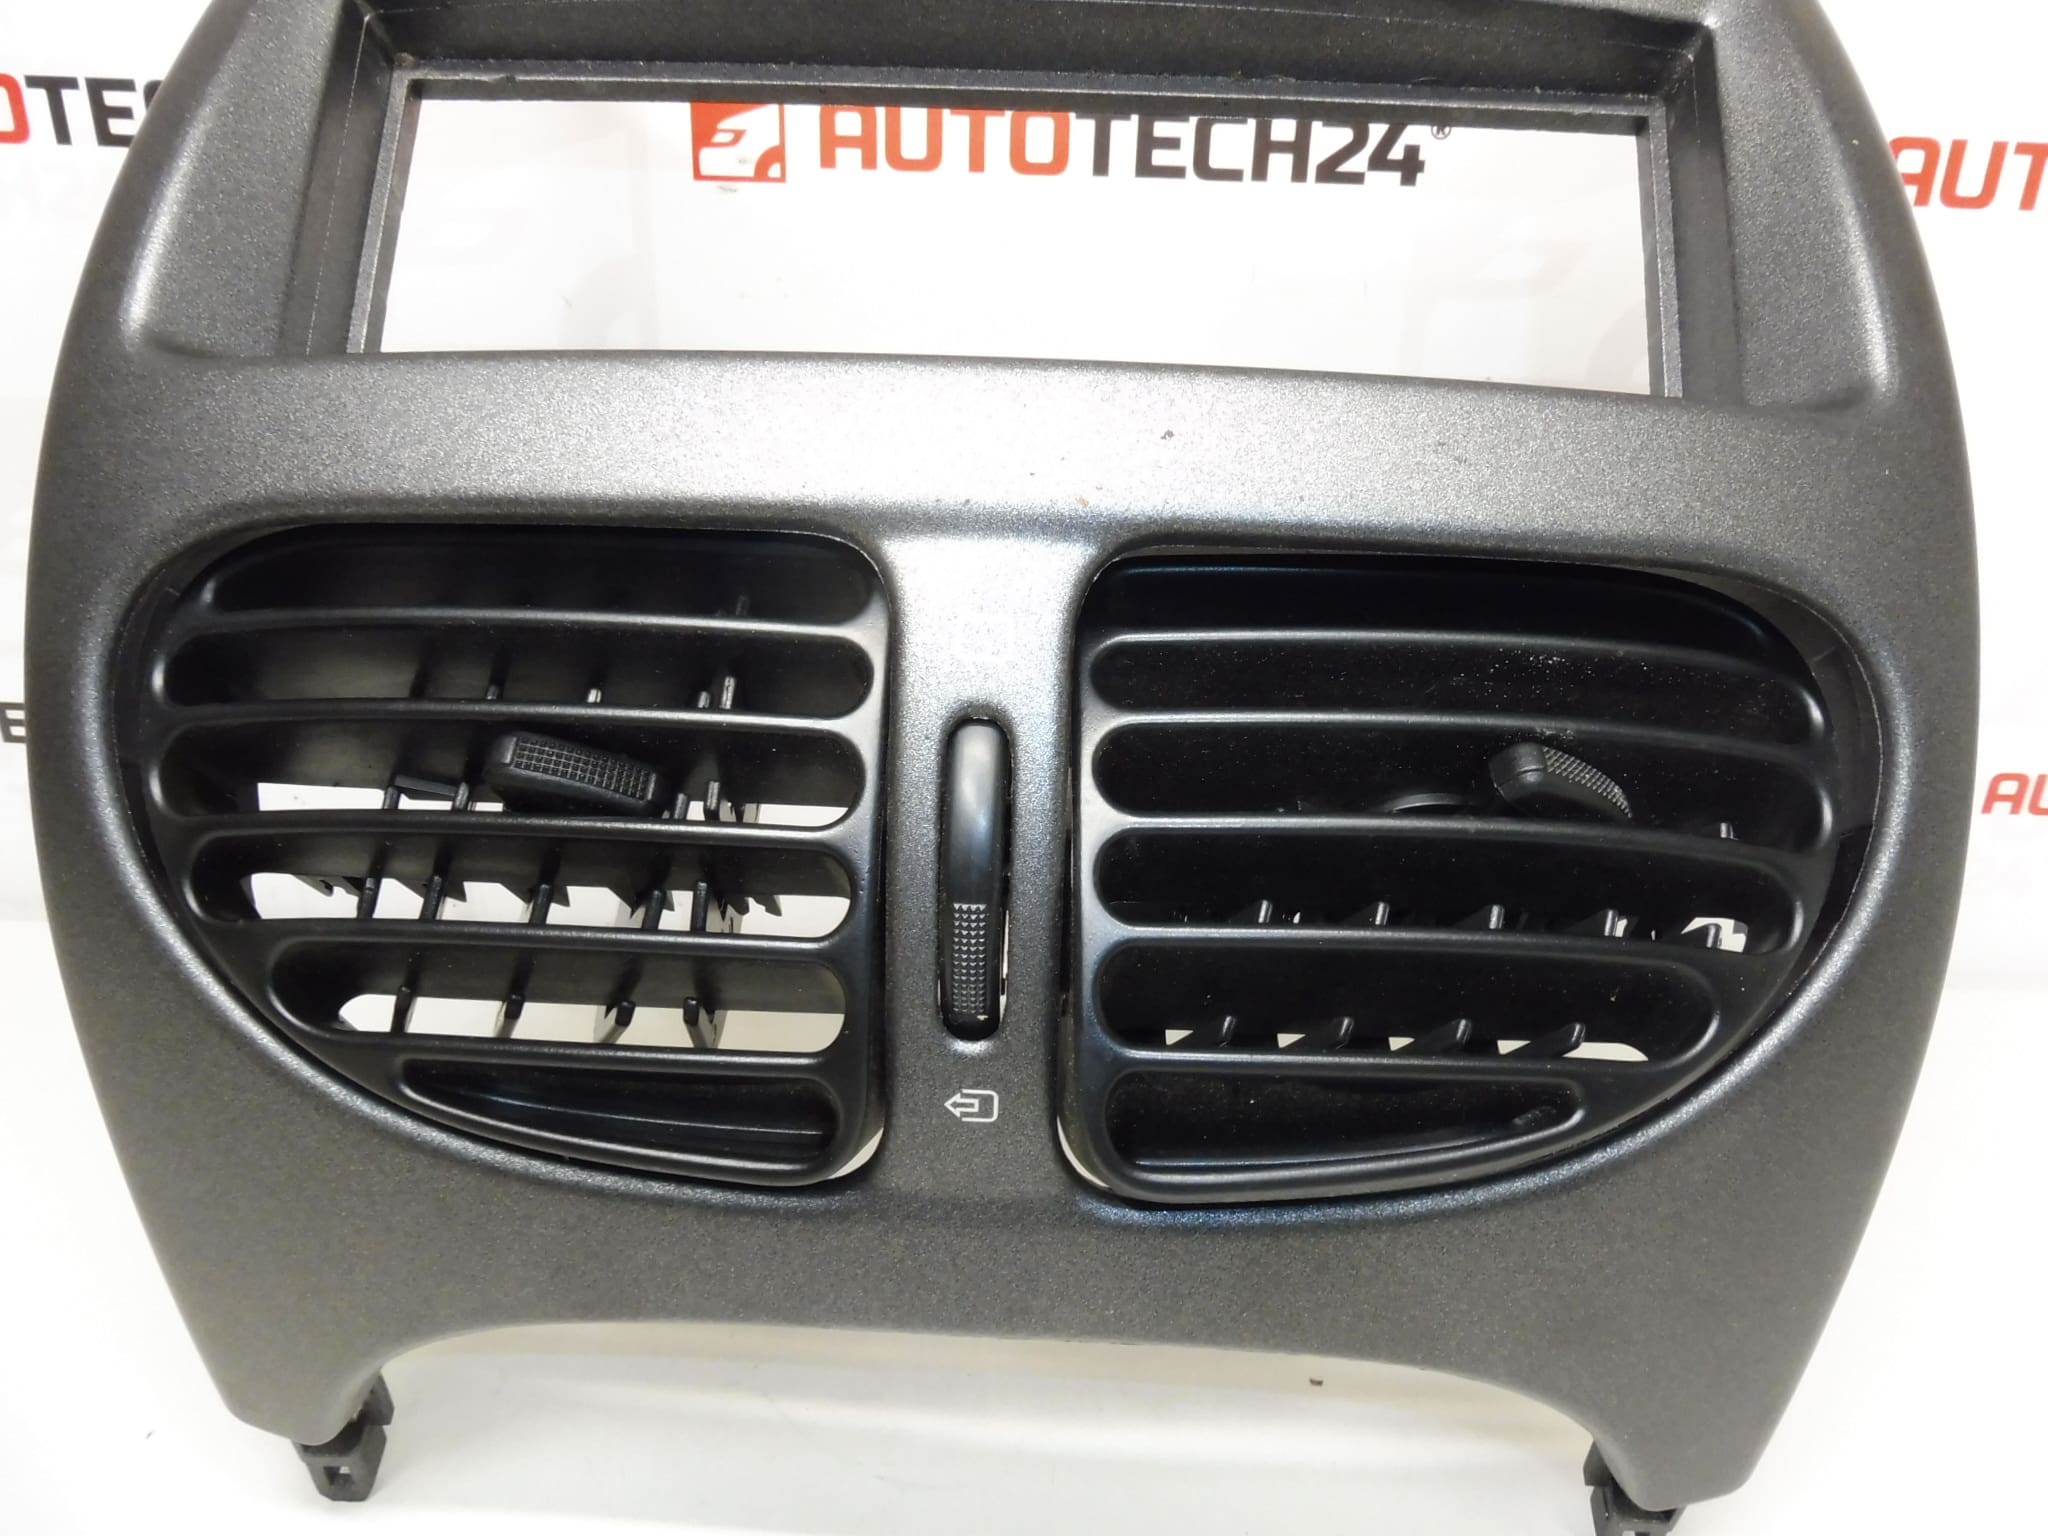 Marco radio Peugeot 206 con ventiladores 8211C5